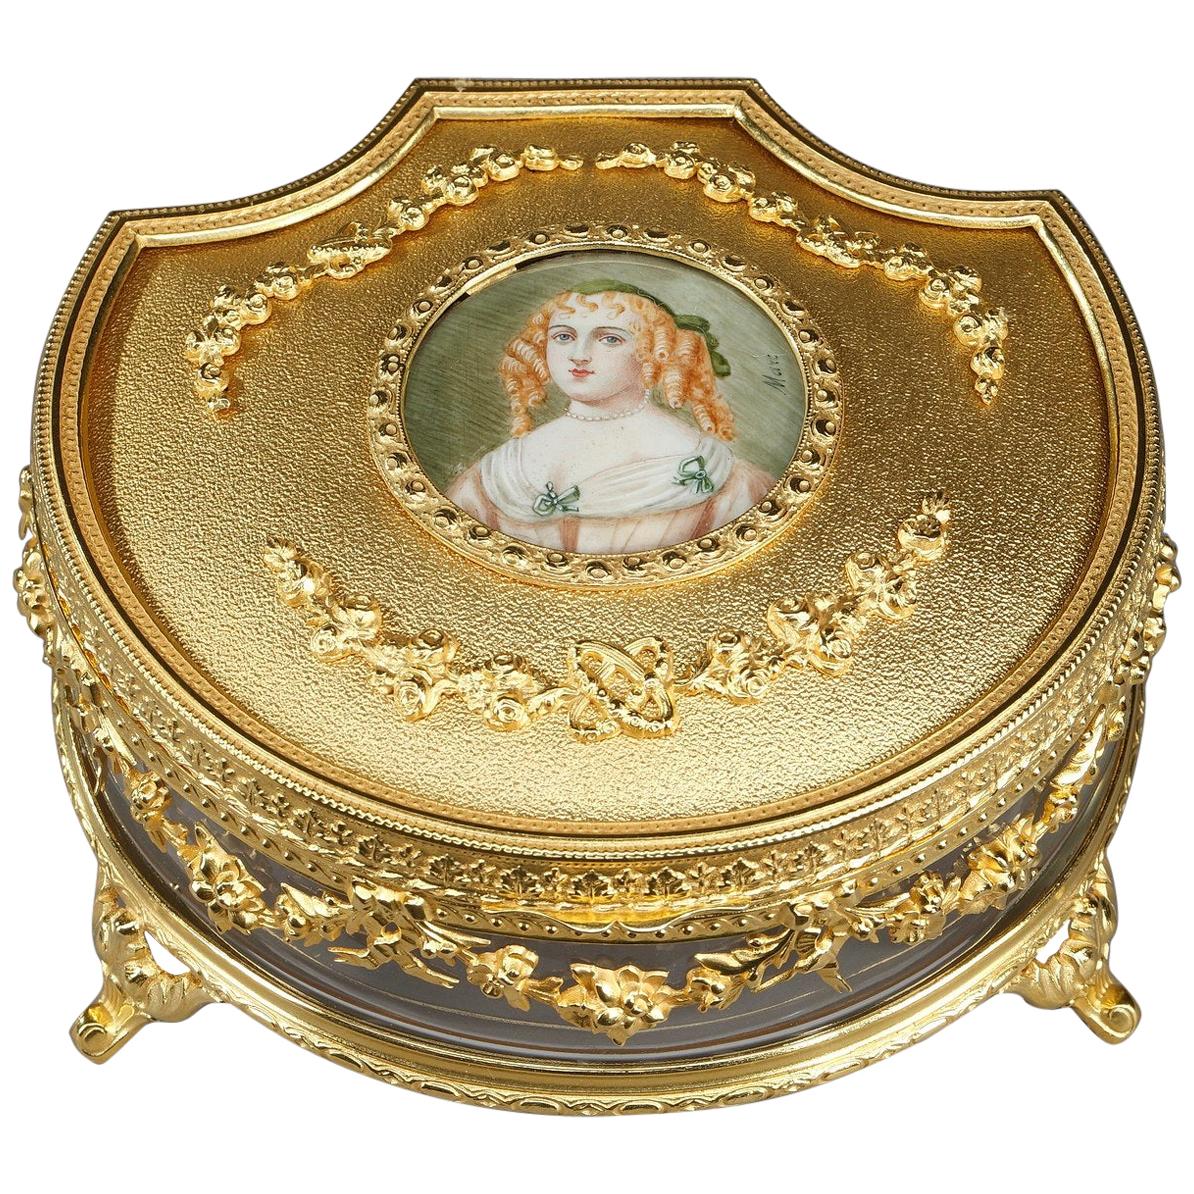 Schmuckkästchen mit dem Porträt von Madame de Sévigné